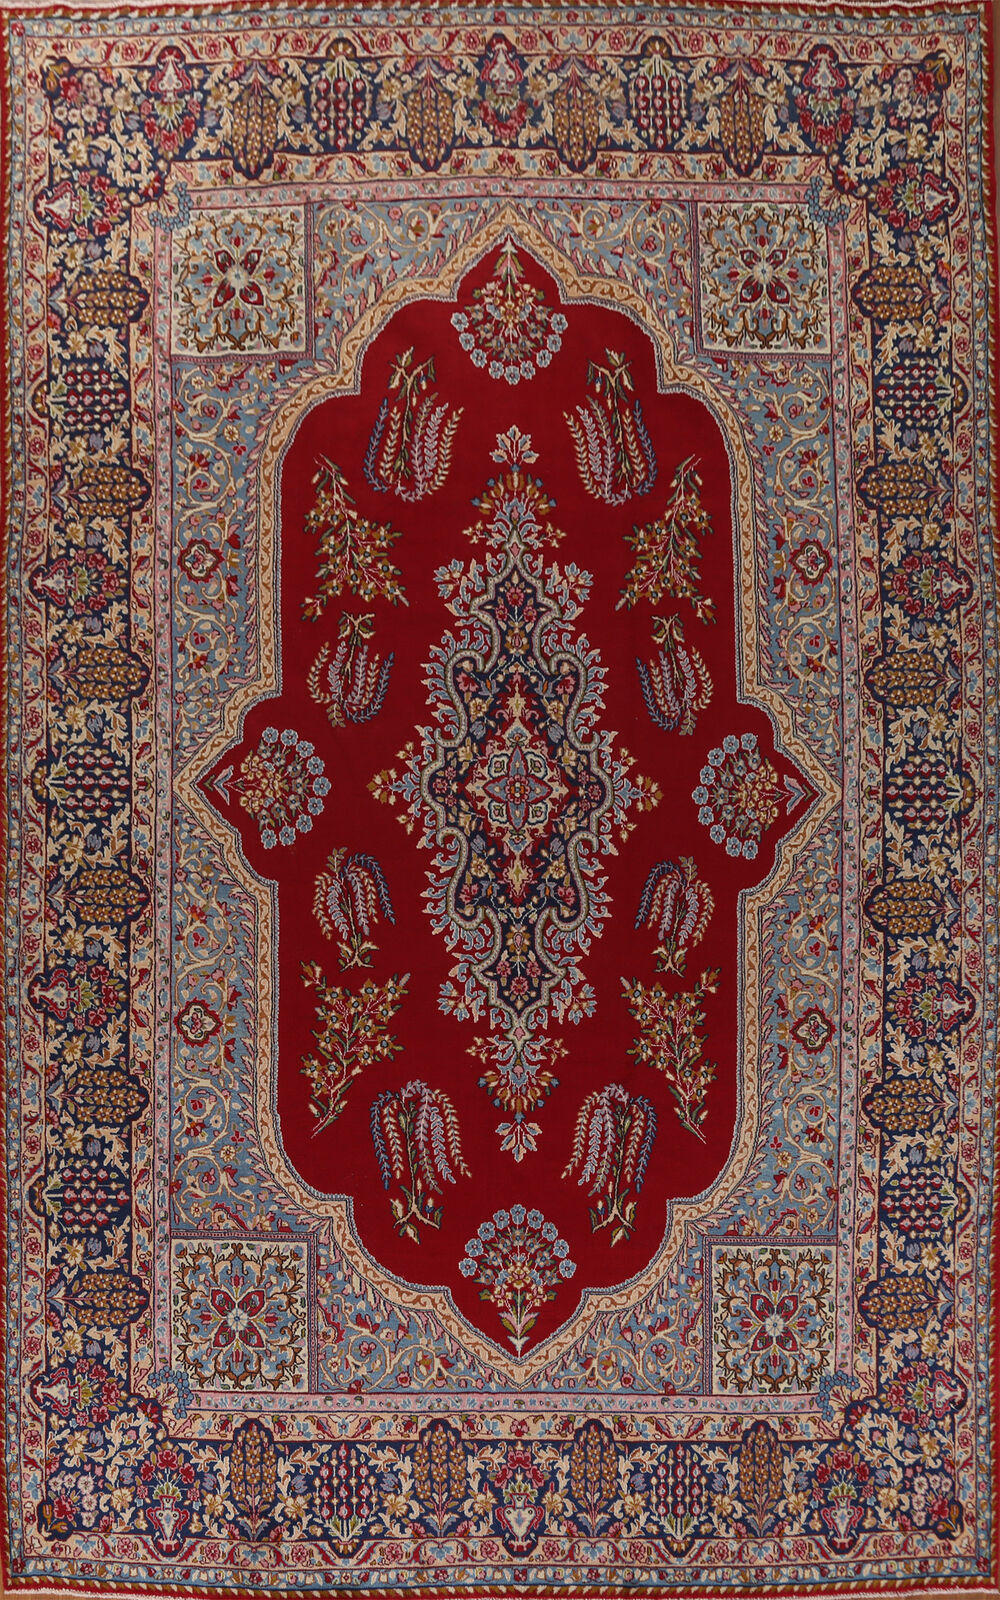 Vintage Traditional Handmade Wool Red Kirman Dining Room Rug Area Carpet 10x14